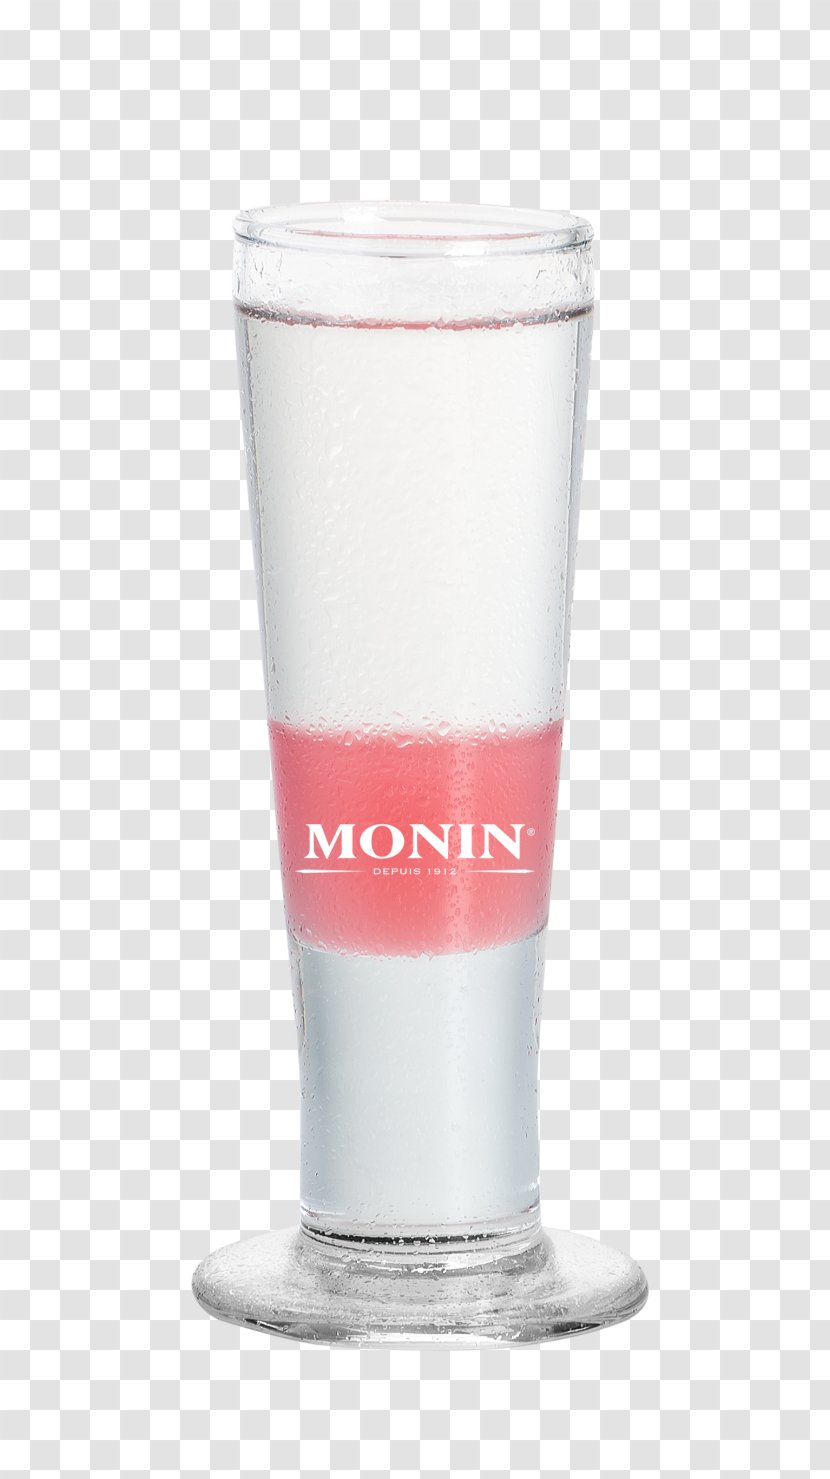 Pint Glass Monin, Inc. Drink Syrup Transparent PNG